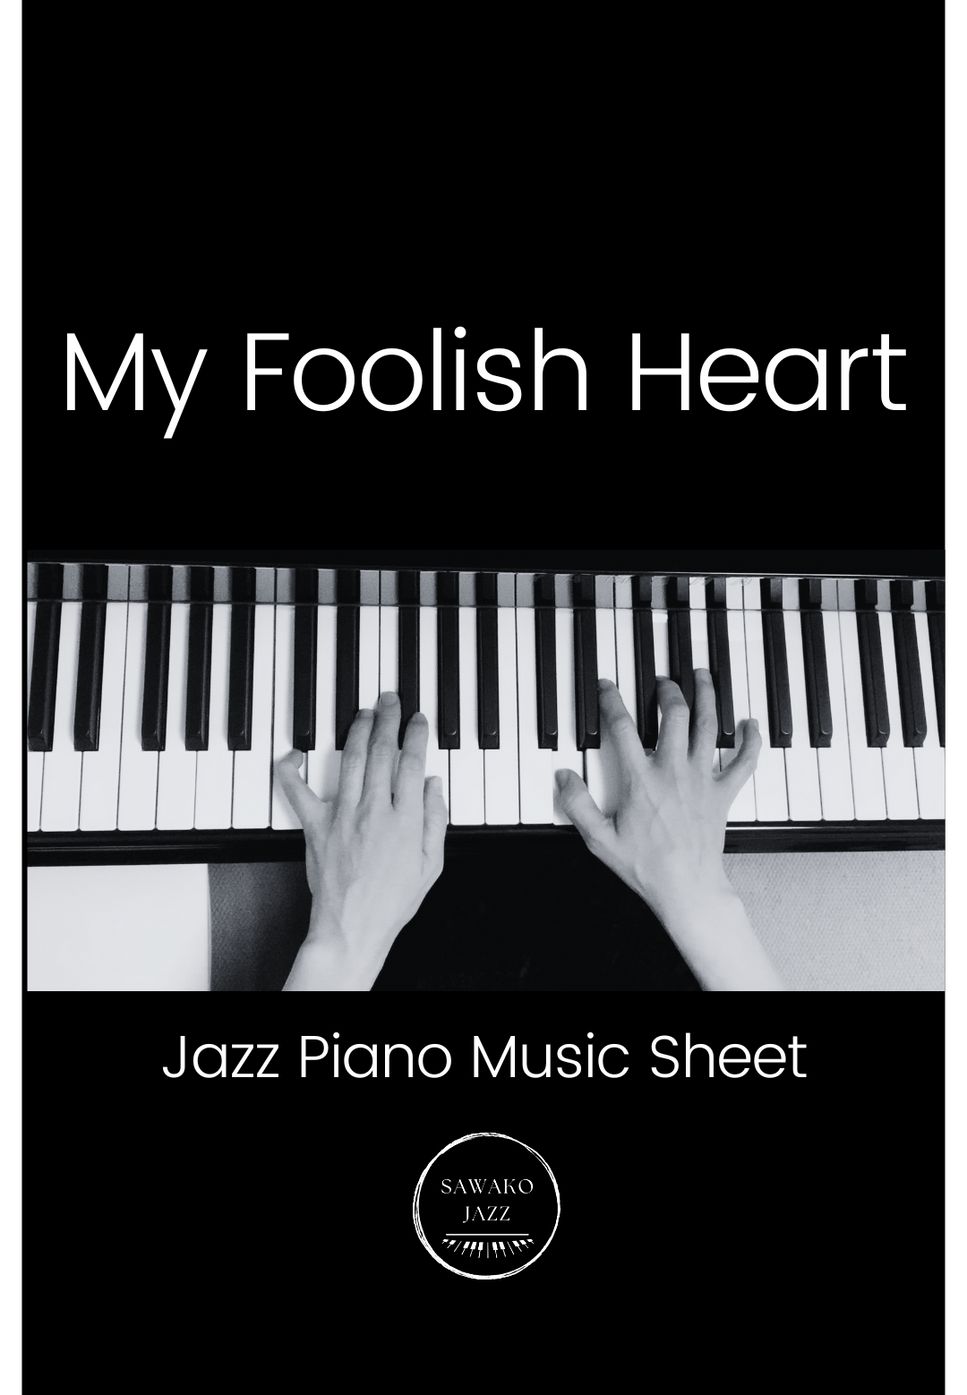 Victor Young - My foolish Heart (piano solo / jazz) by Sawako Hyodo